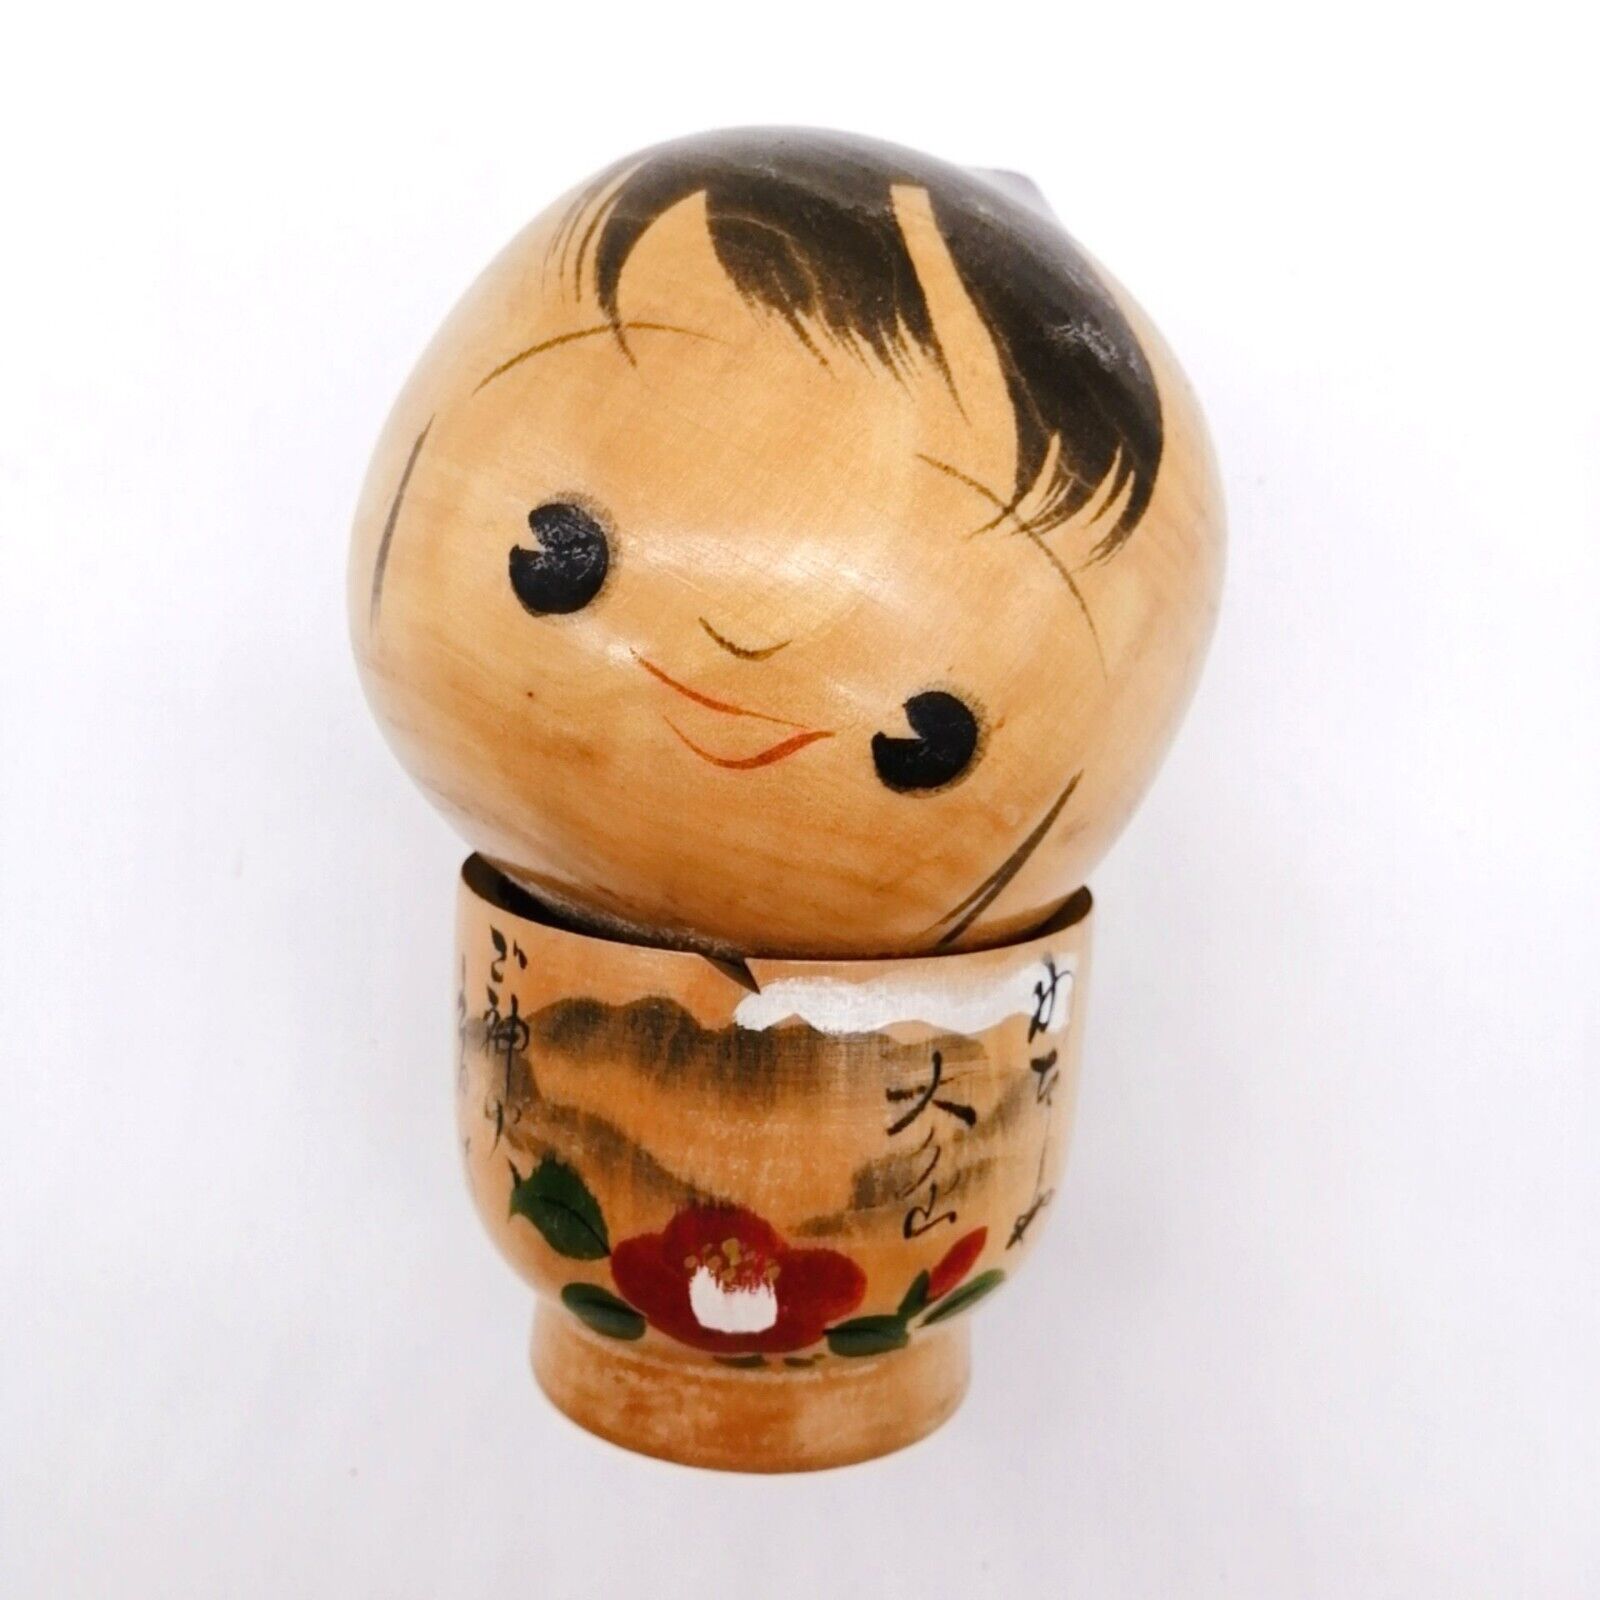 14cm Japanese Creative KOKESHI Doll Vintage by TAKESHI Signed Interior KOB694